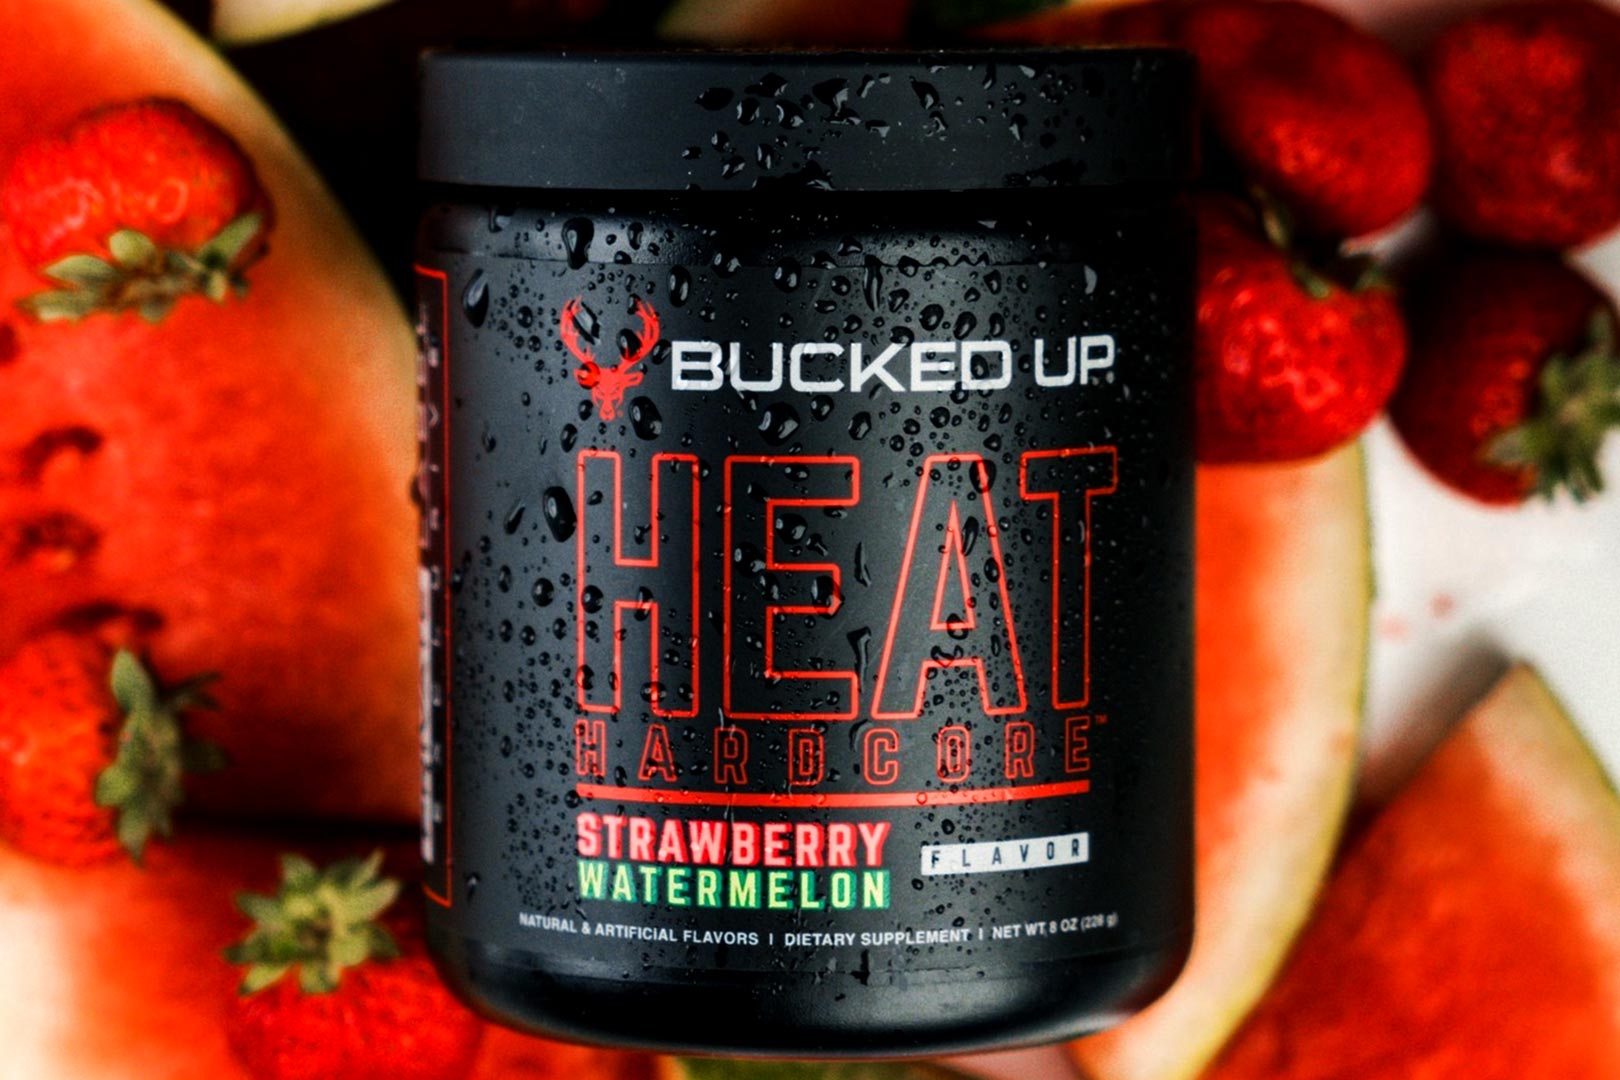 Bucked Up Strawberry Watermelon Heat